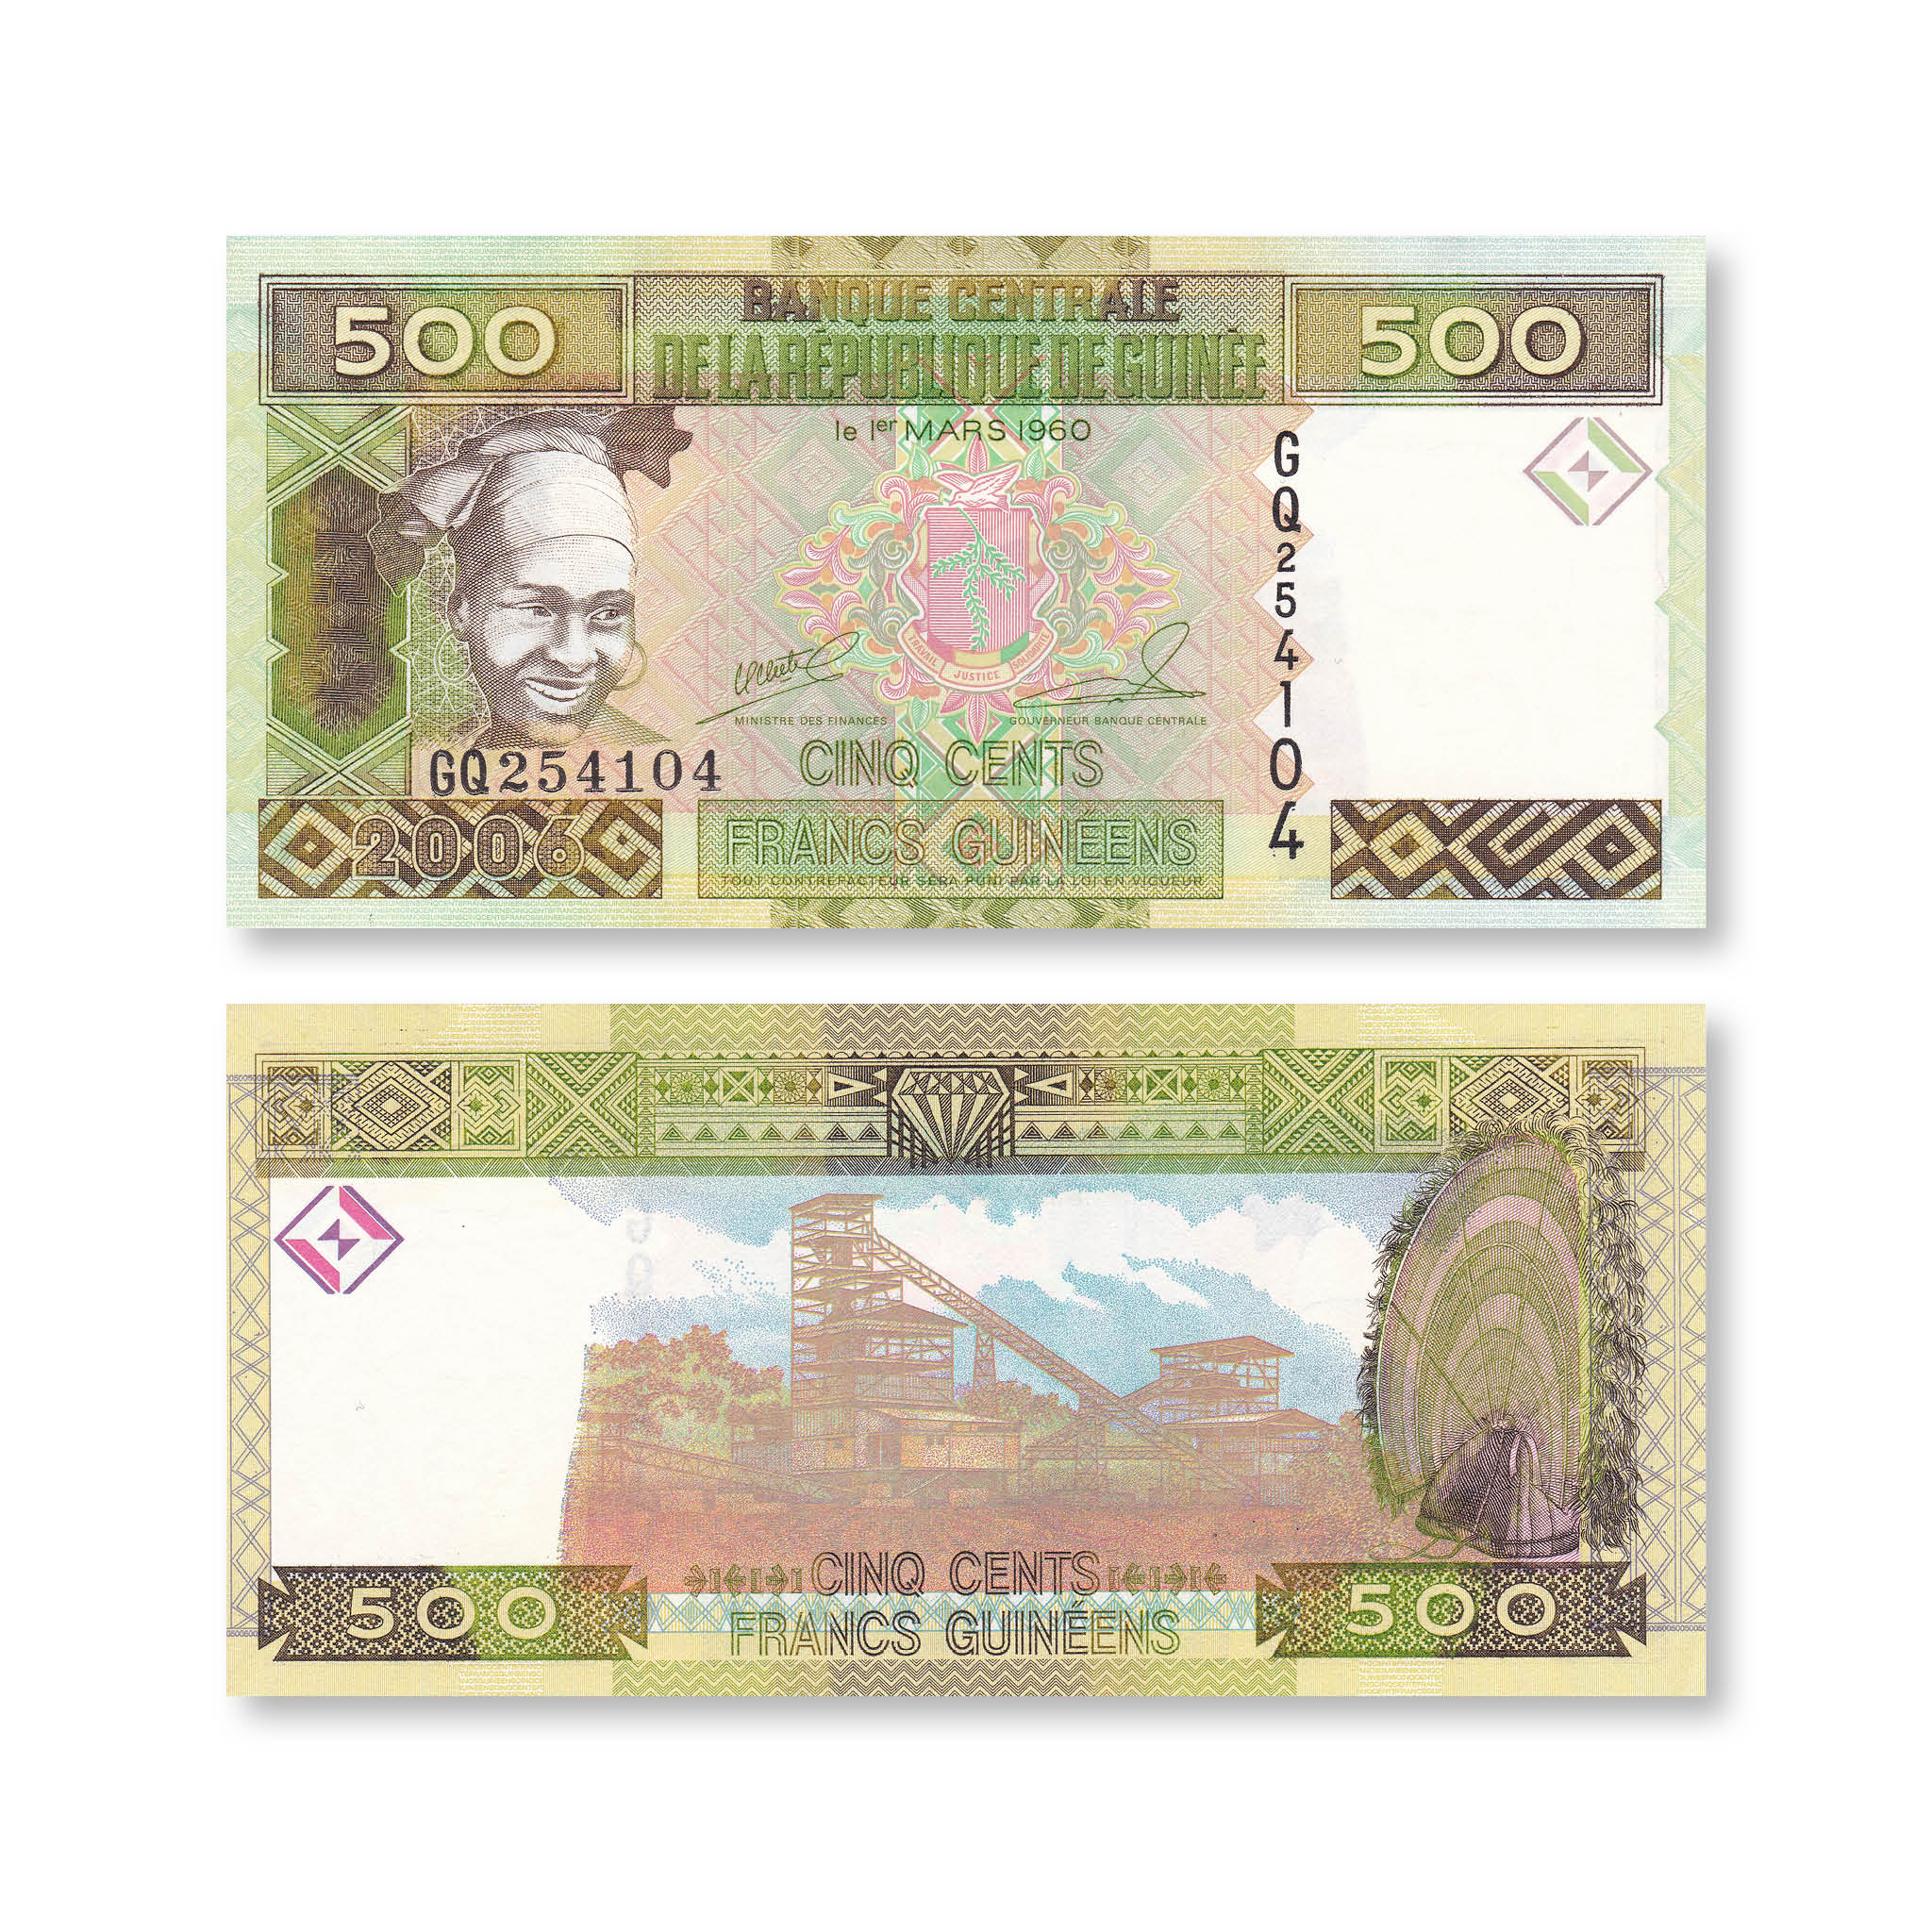 Guinea 500 Francs, 2006, B328a, P39a, UNC - Robert's World Money - World Banknotes